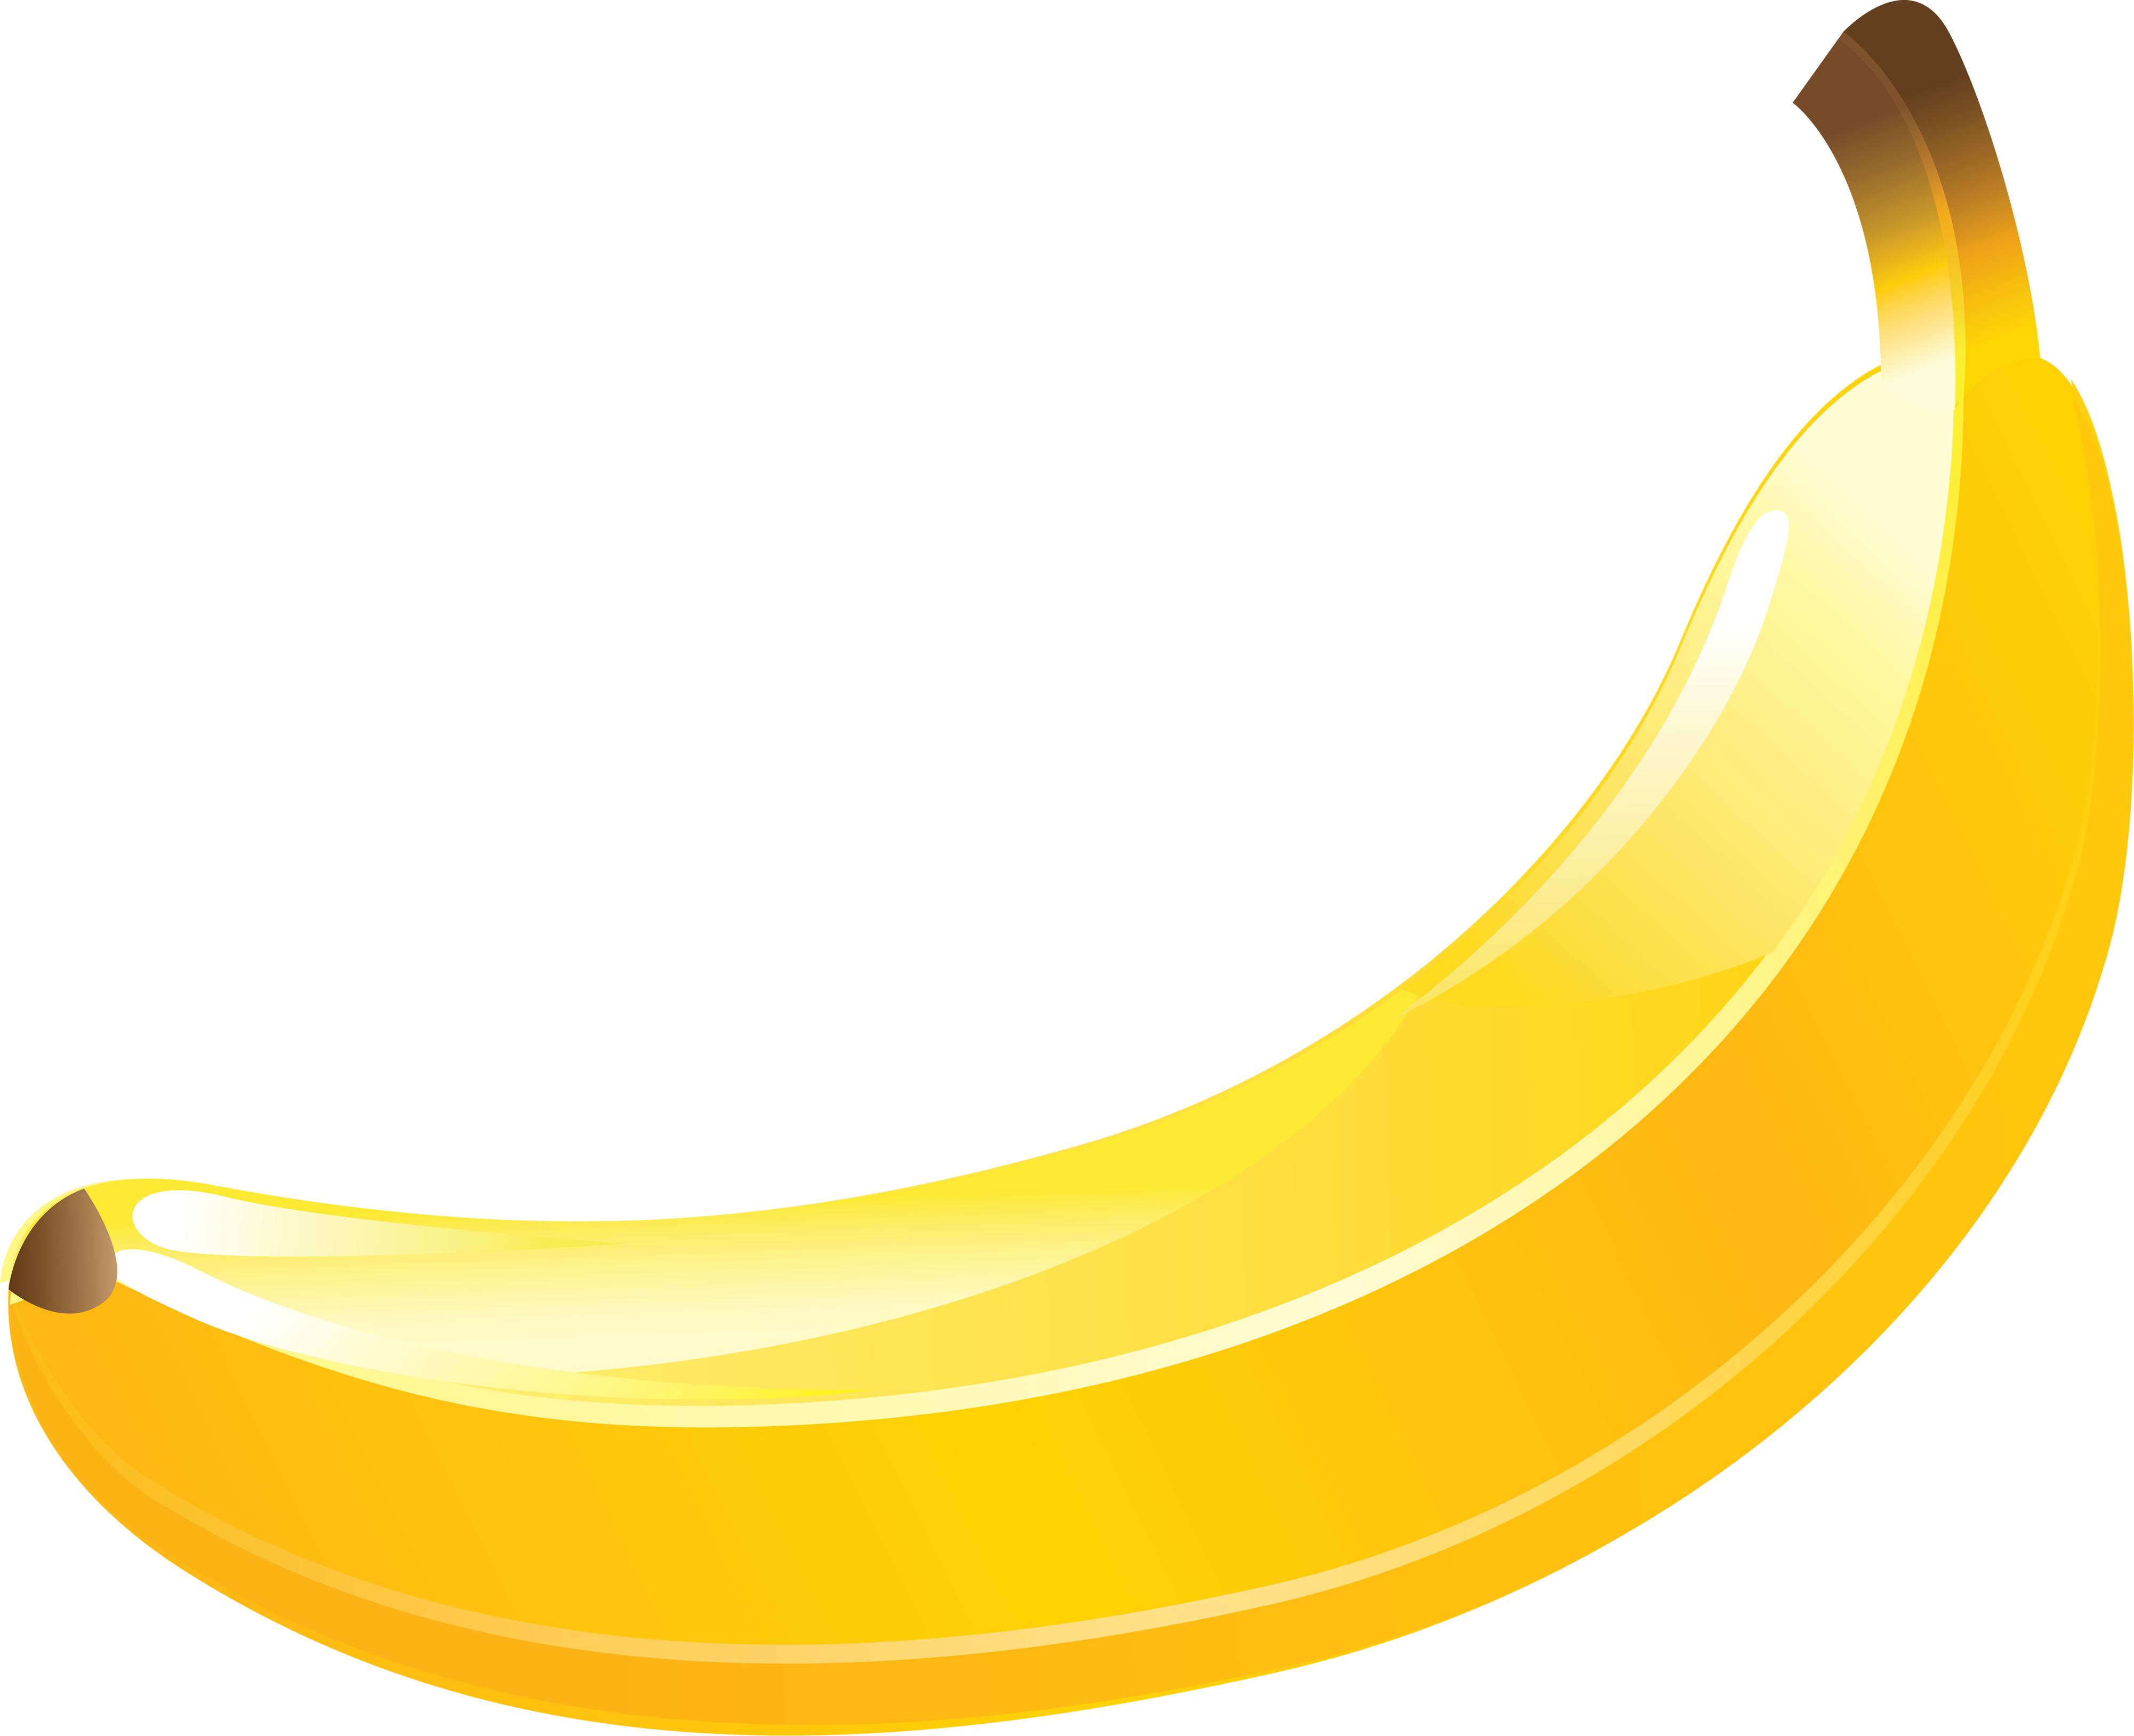 Banane Transparentes Image